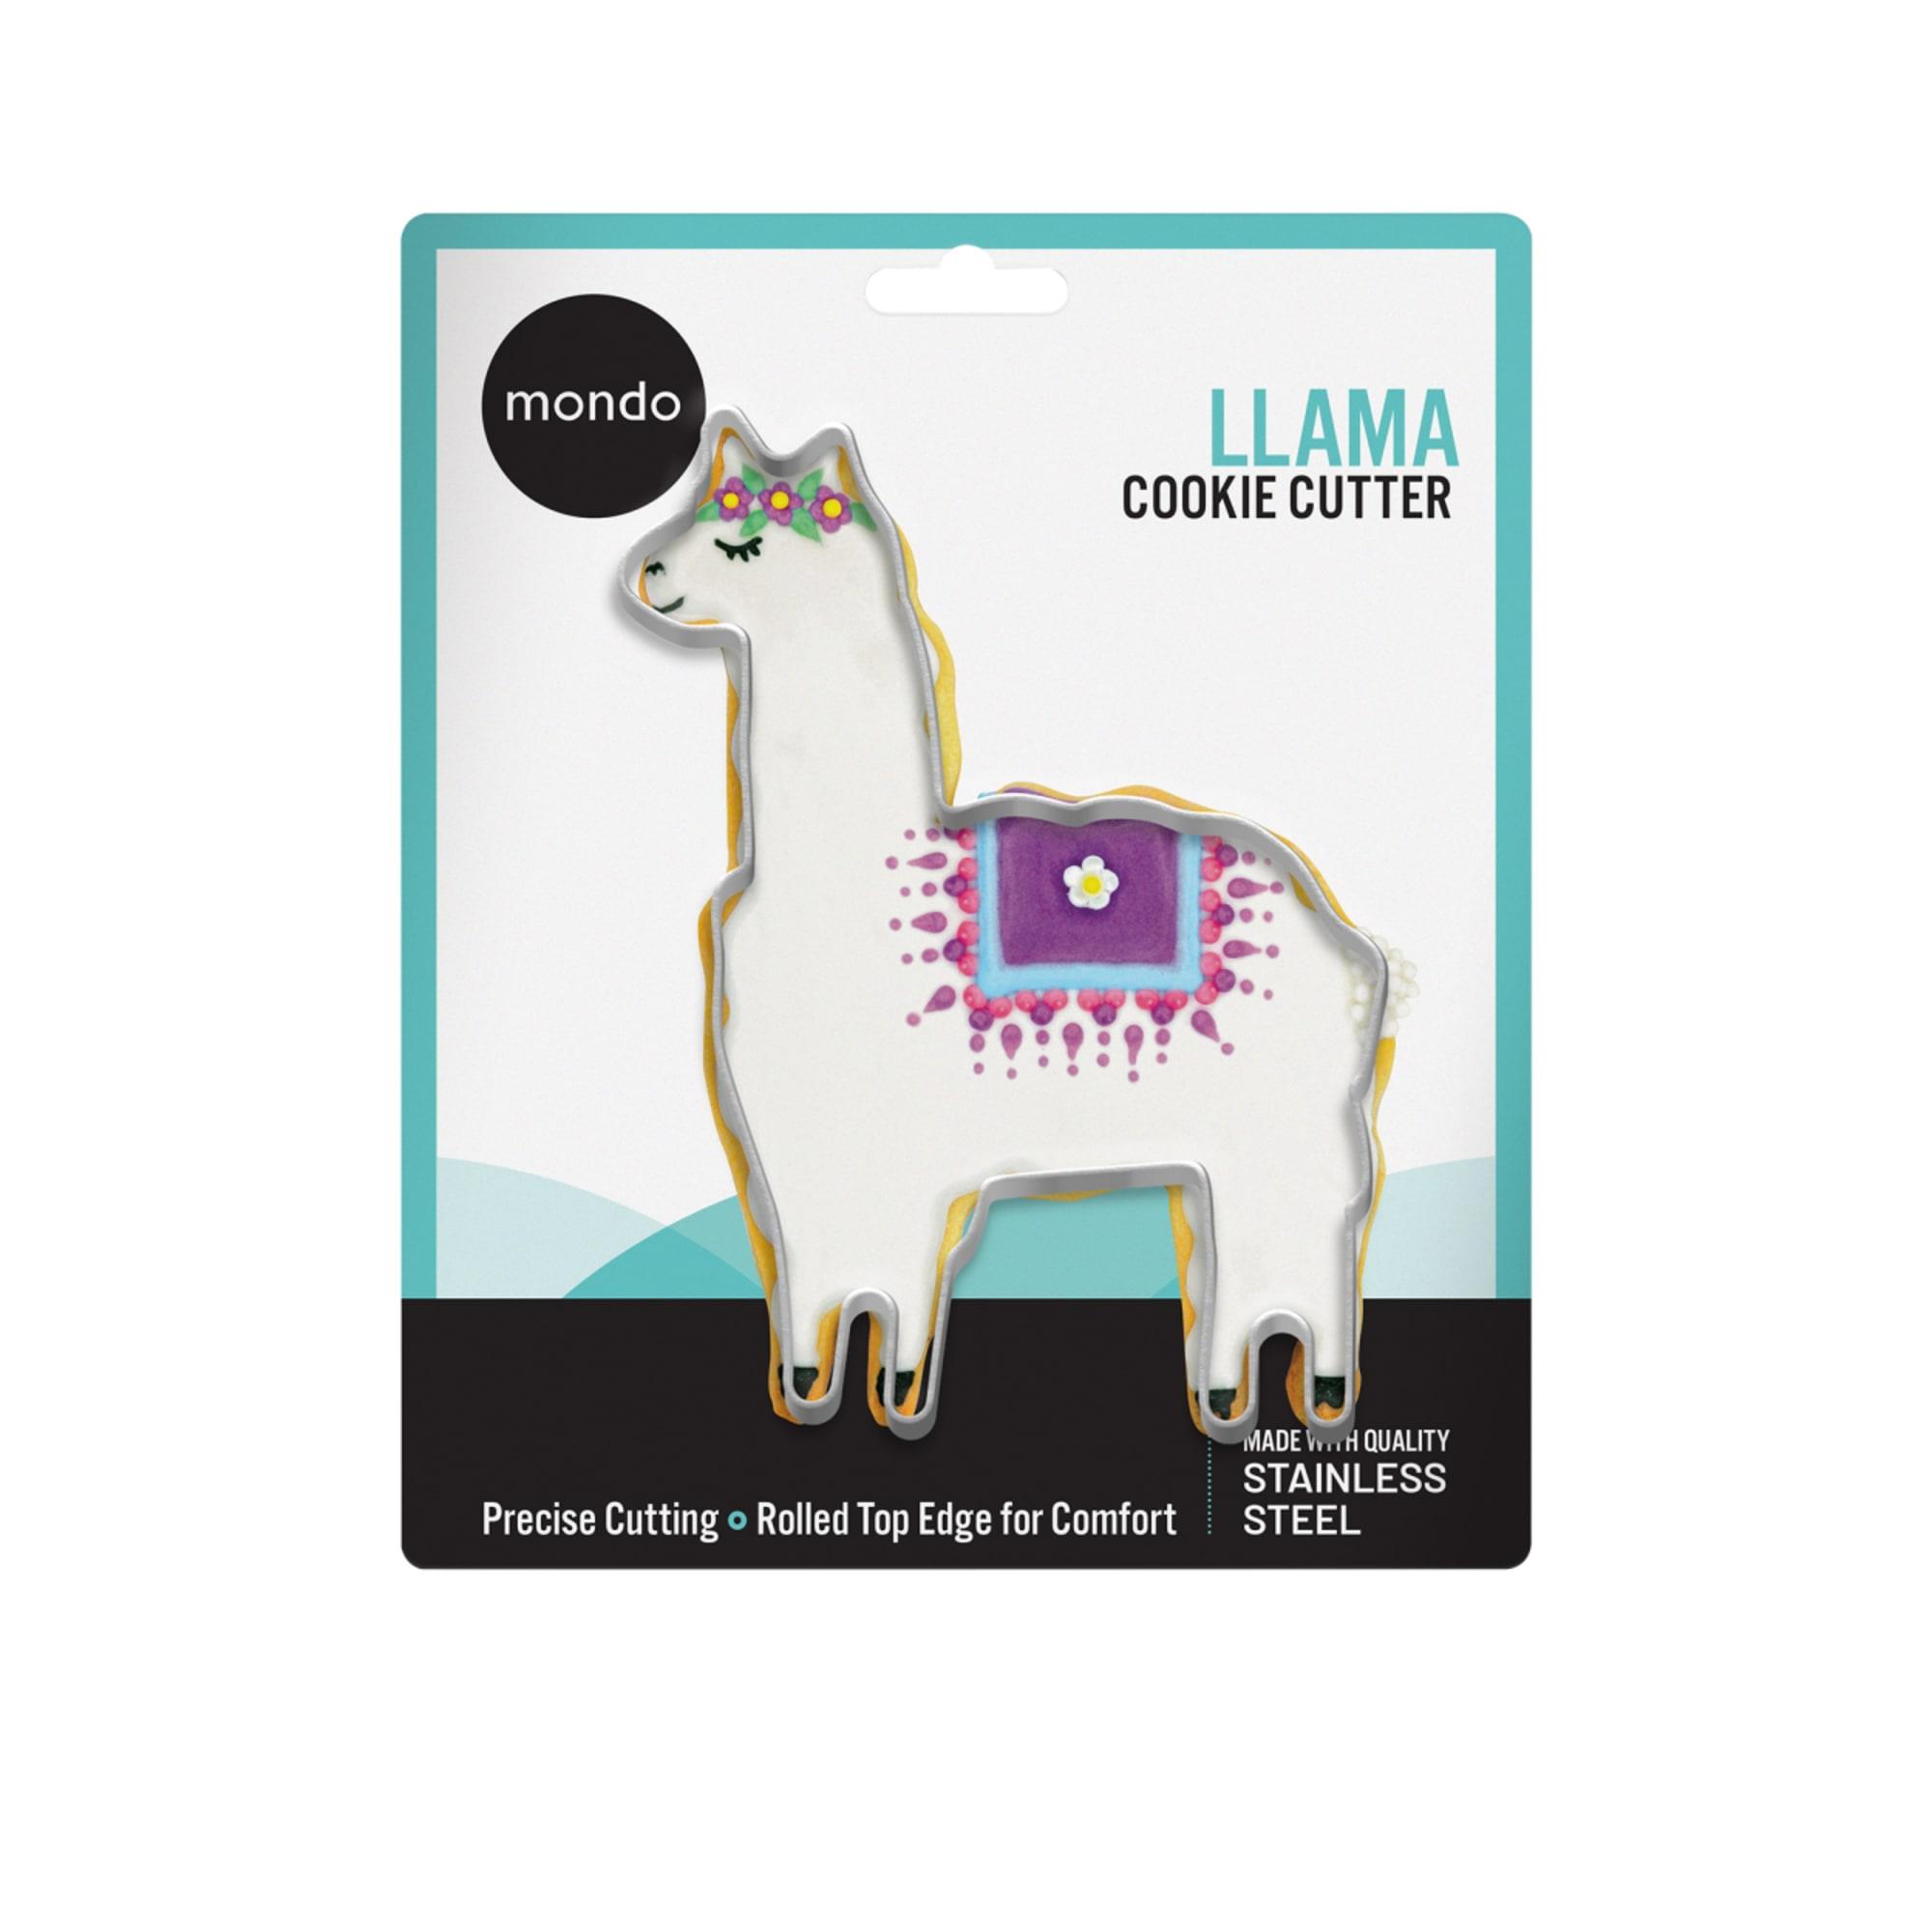 Mondo Cookie Cutter Llama Image 1